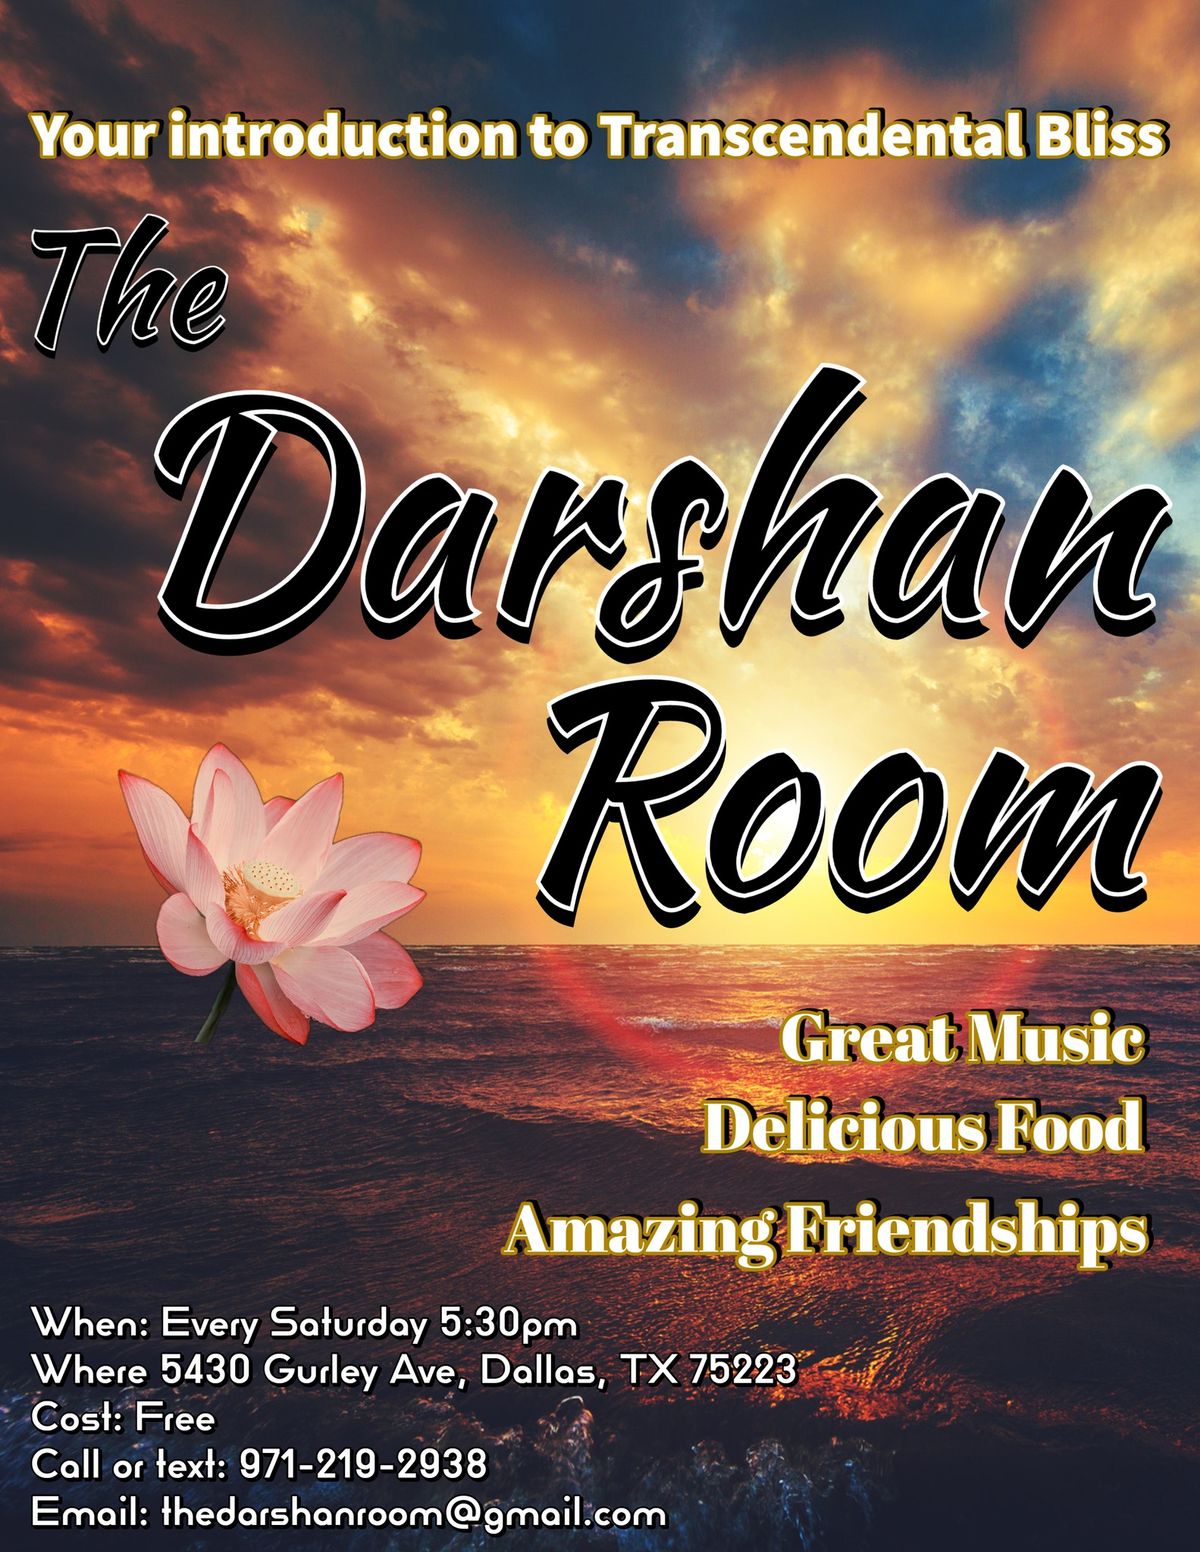 The Darshan Room